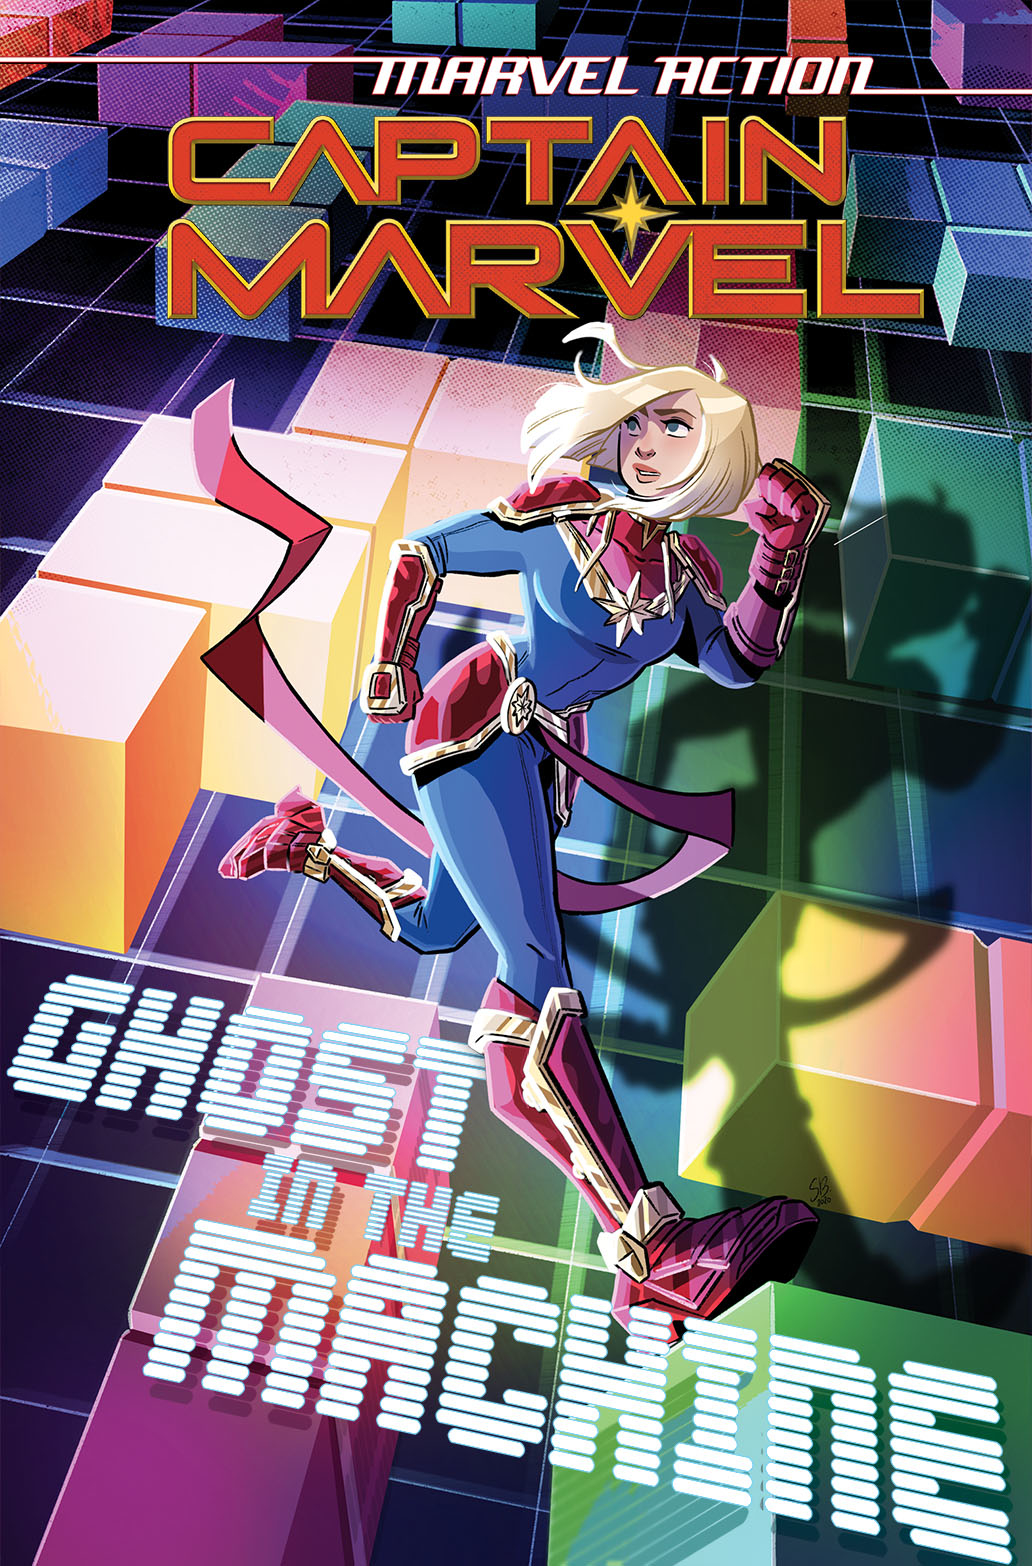 Marvel Action Captain Marvel Graphic Novel Volume 3 Ghost In Machine